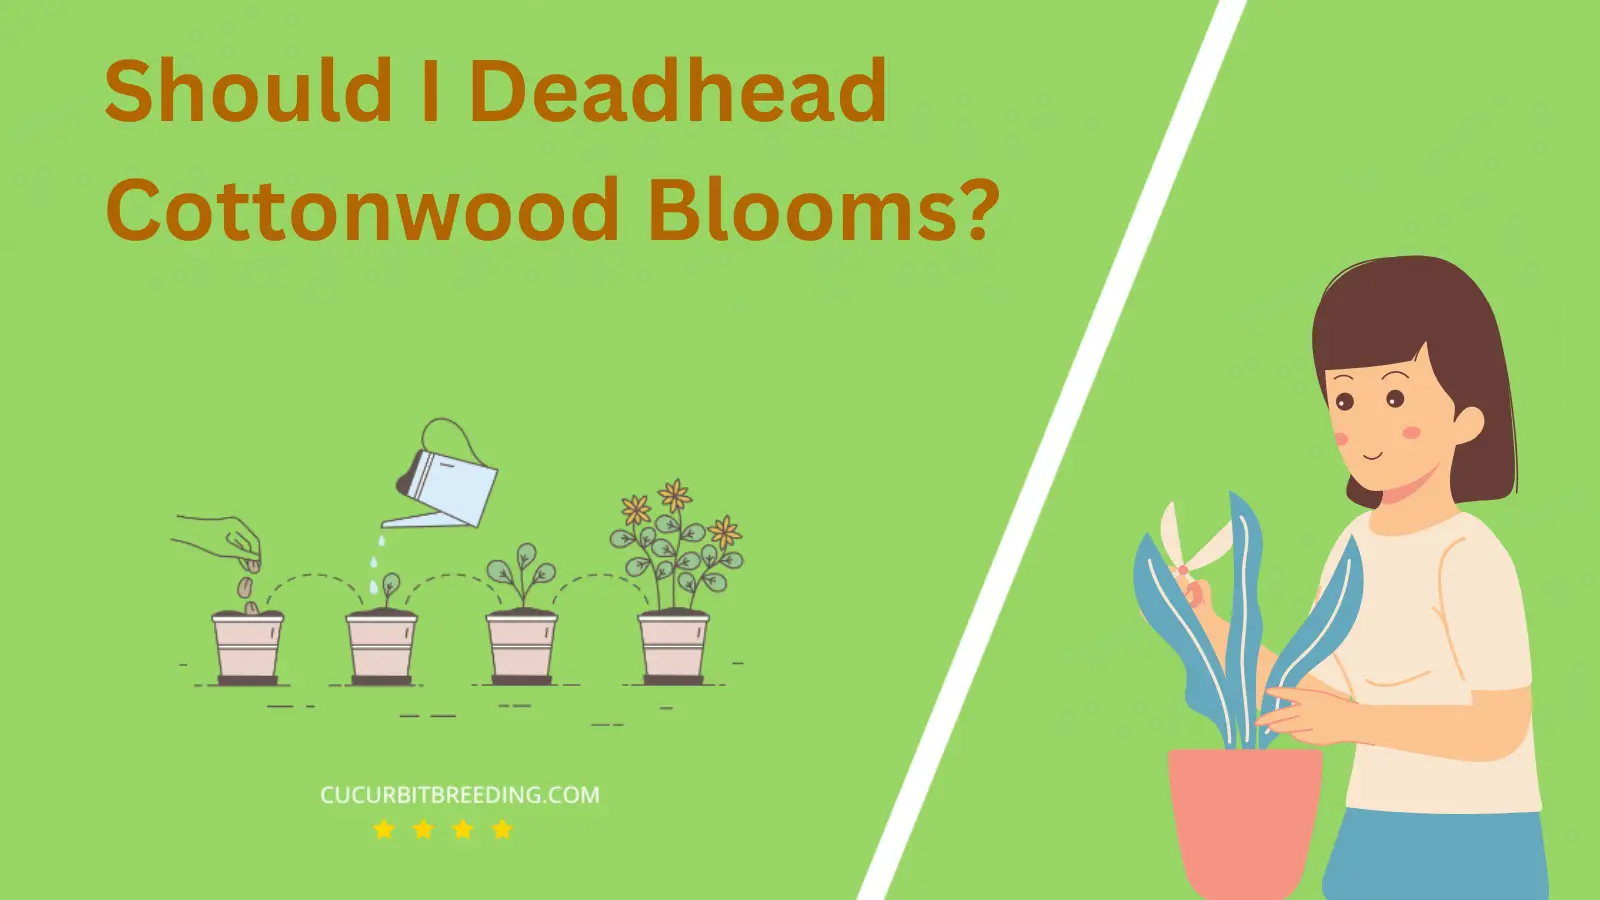 Should I Deadhead Cottonwood Blooms?